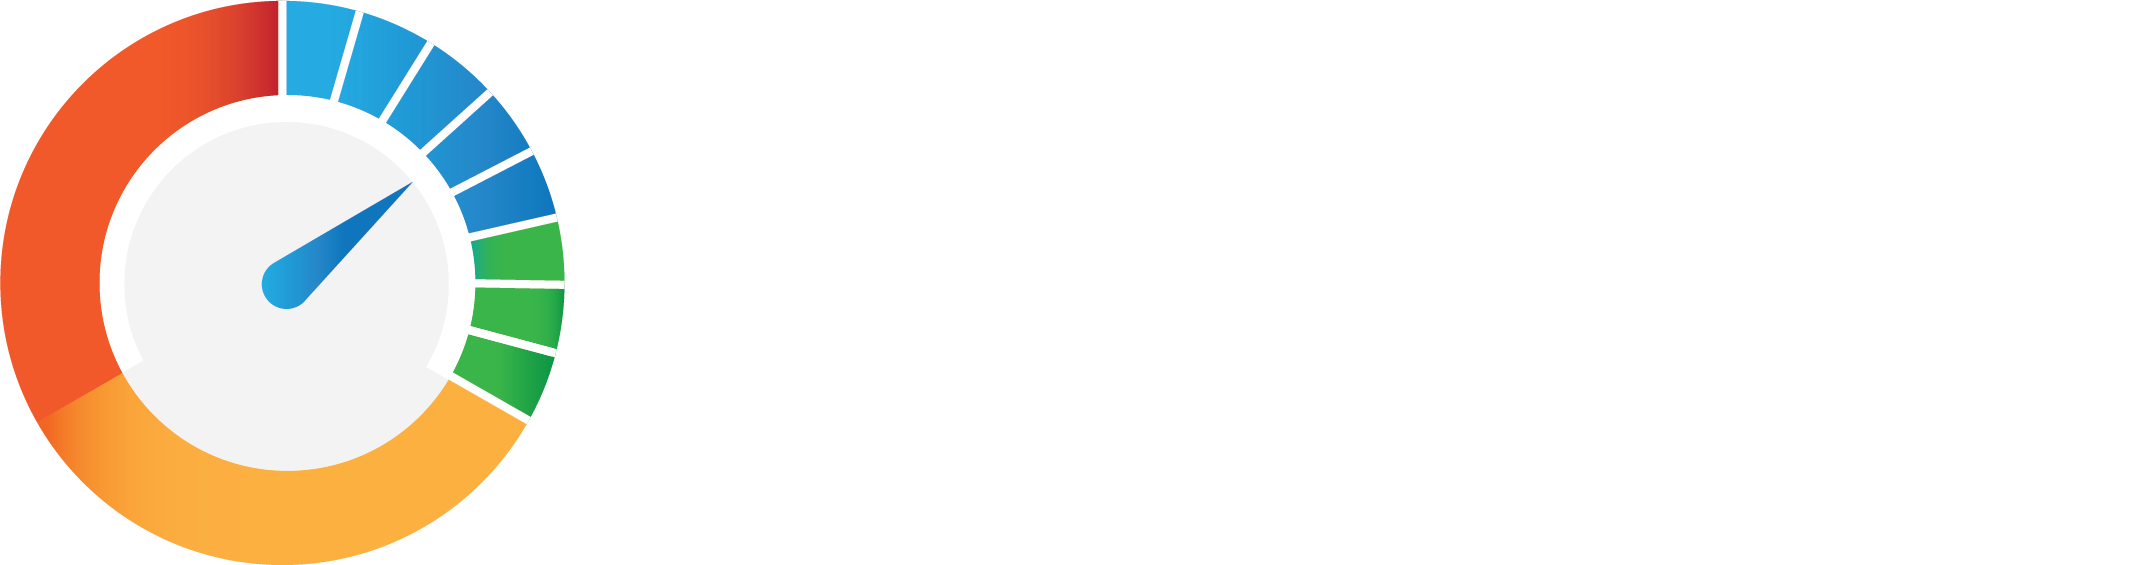 Permasys Logo [Design 2]-1